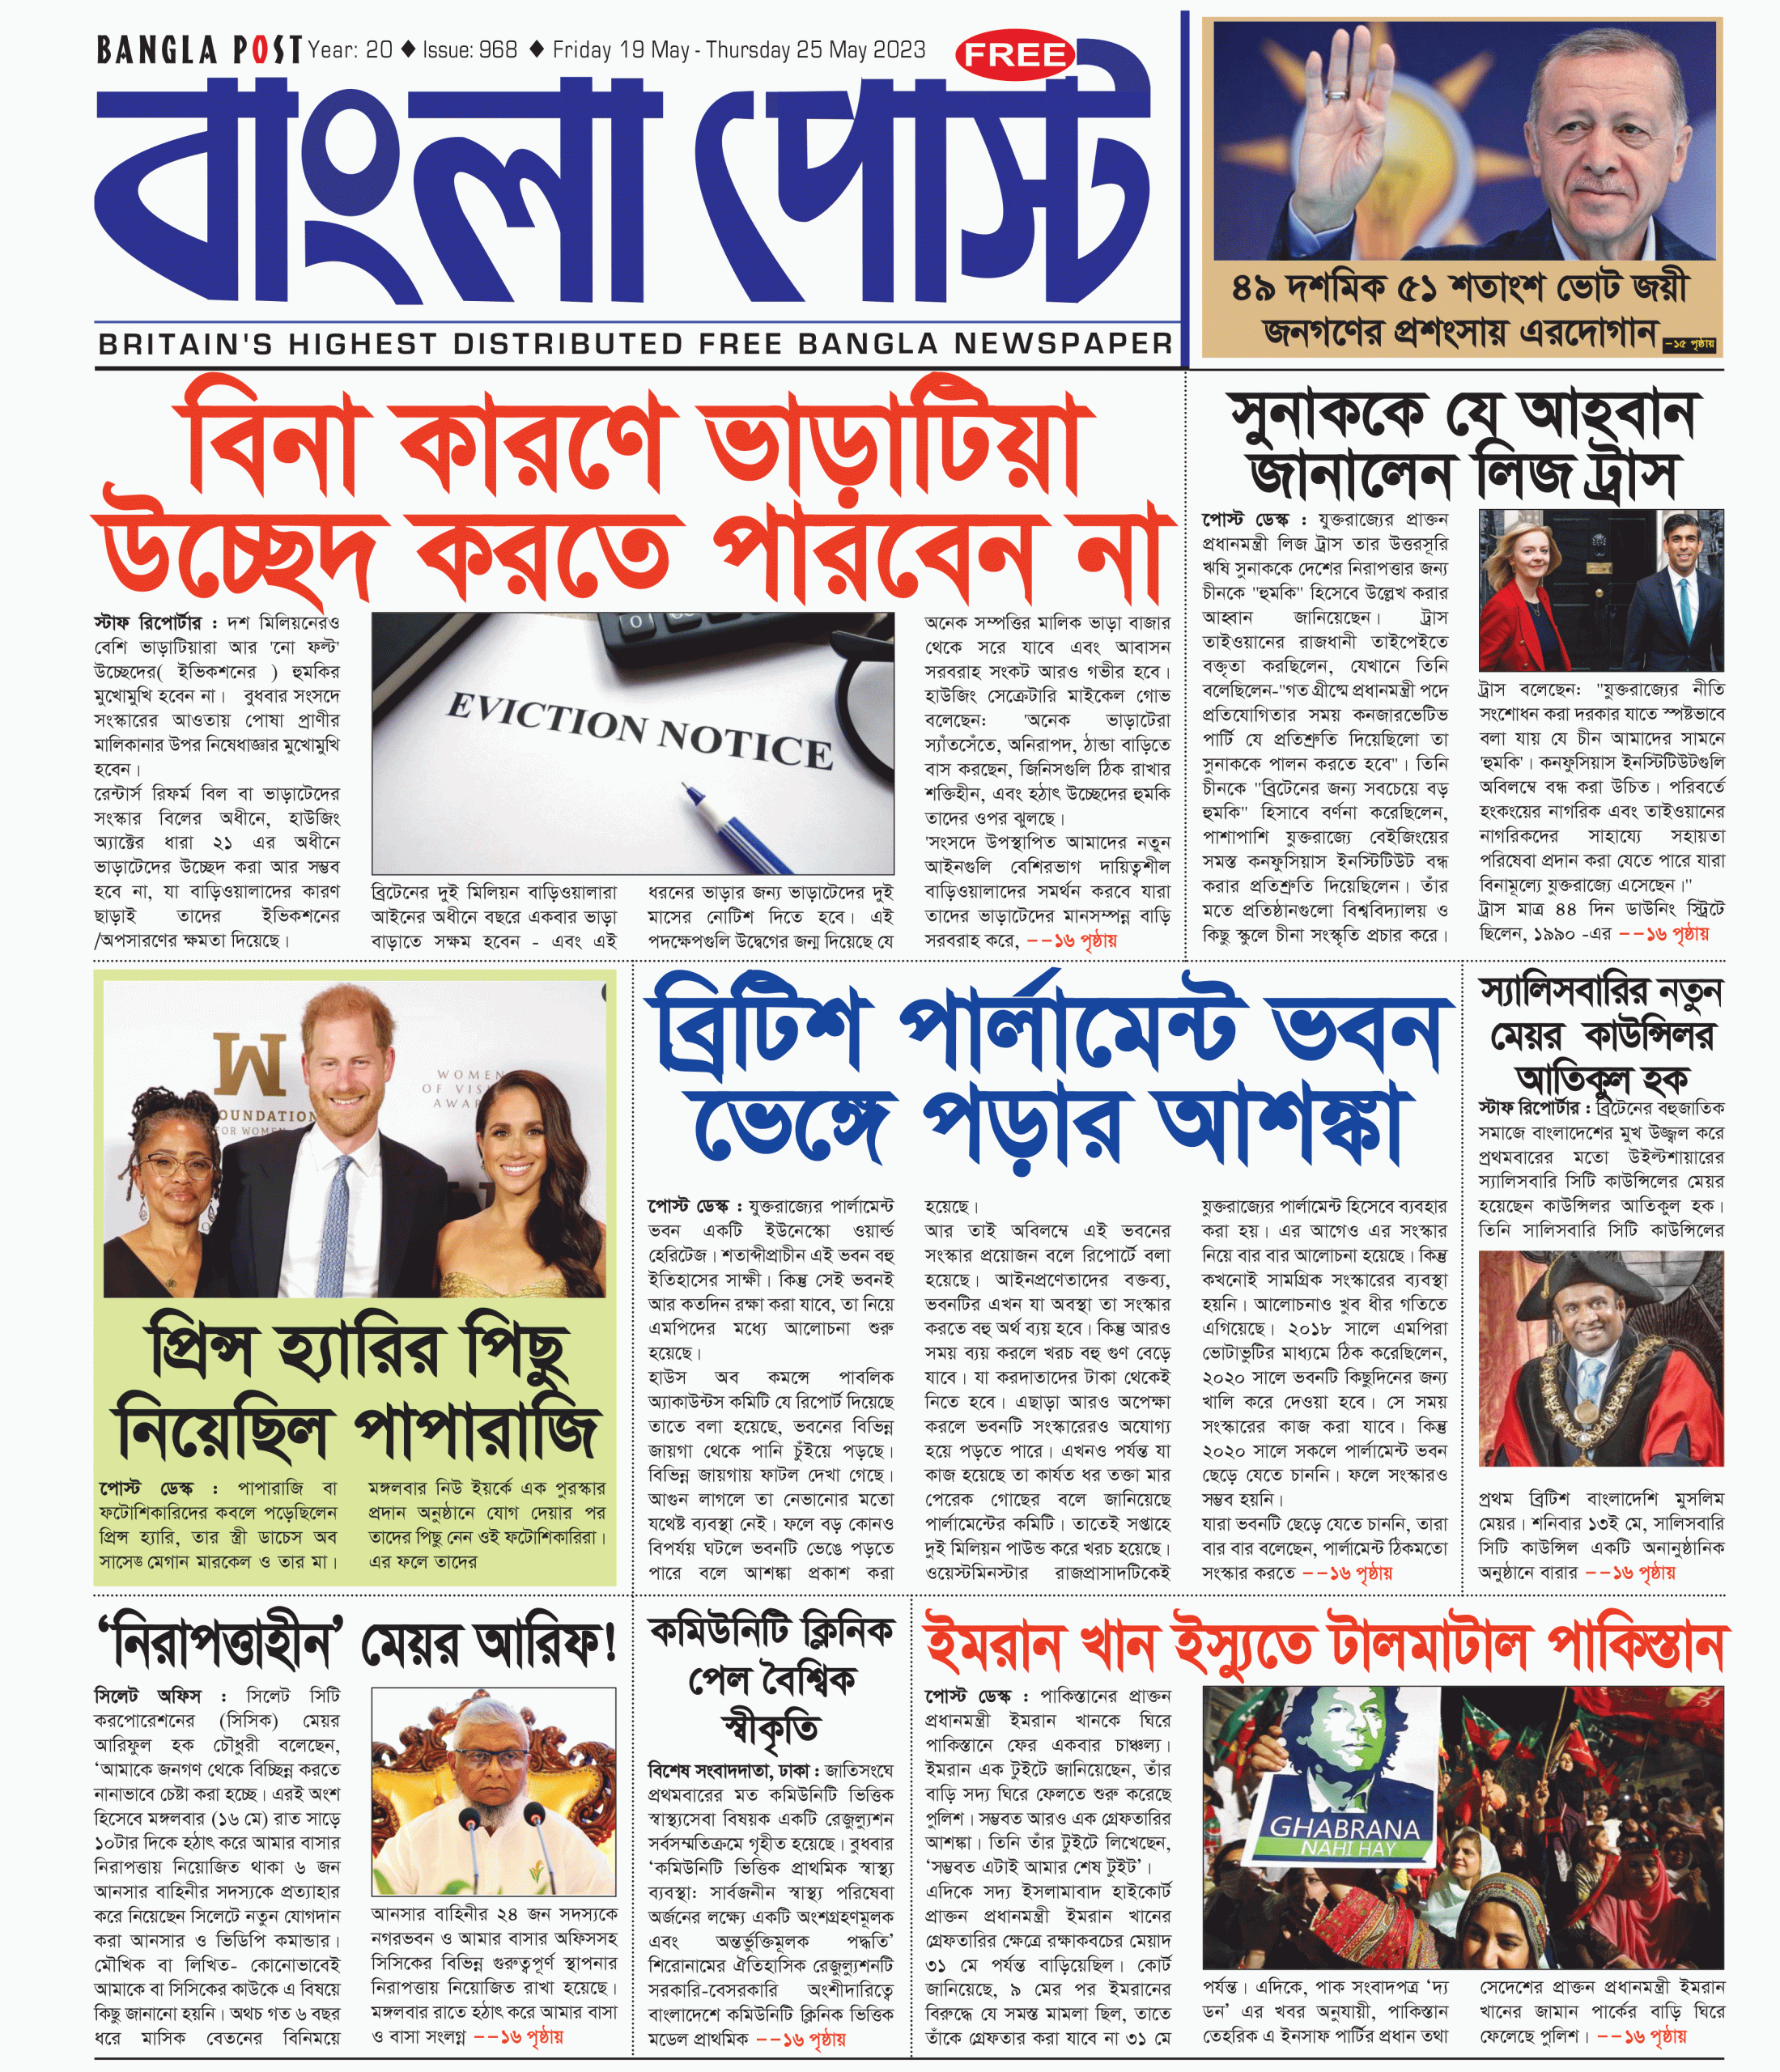 Bangla Post Issue – 968 | 19 May 2023